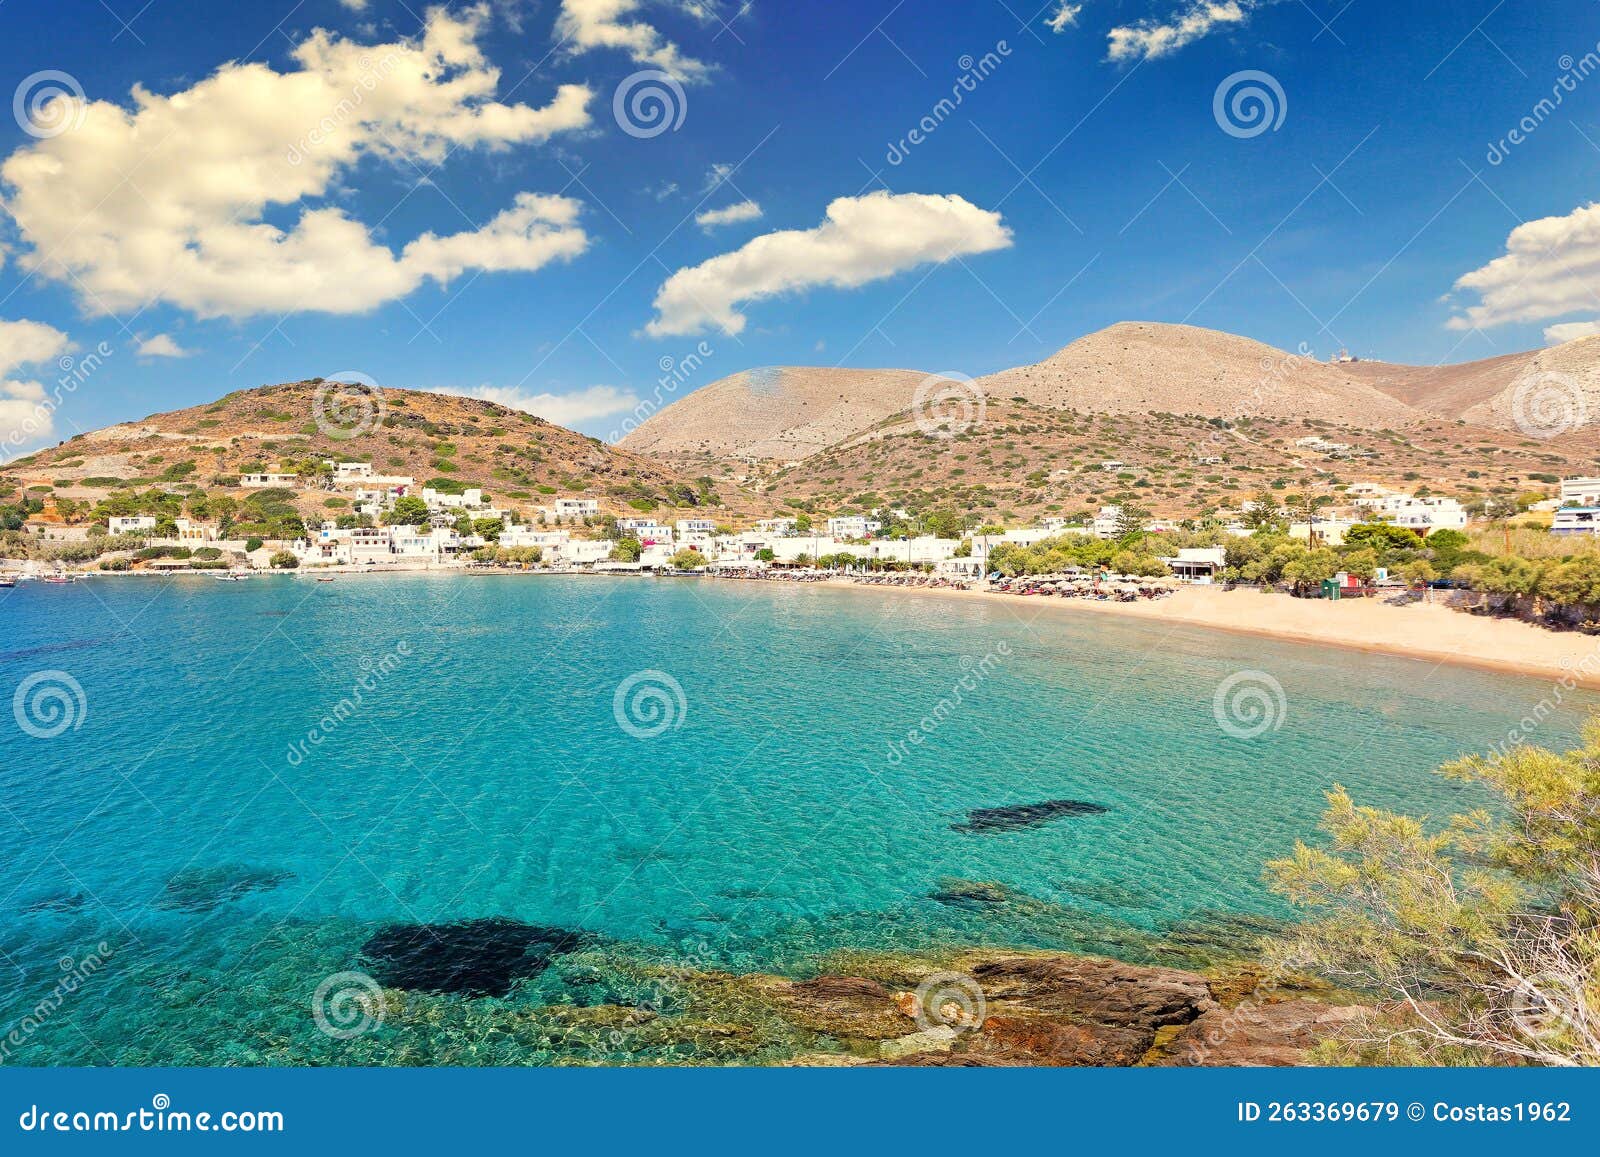 the sandy beach kini in syros, greece